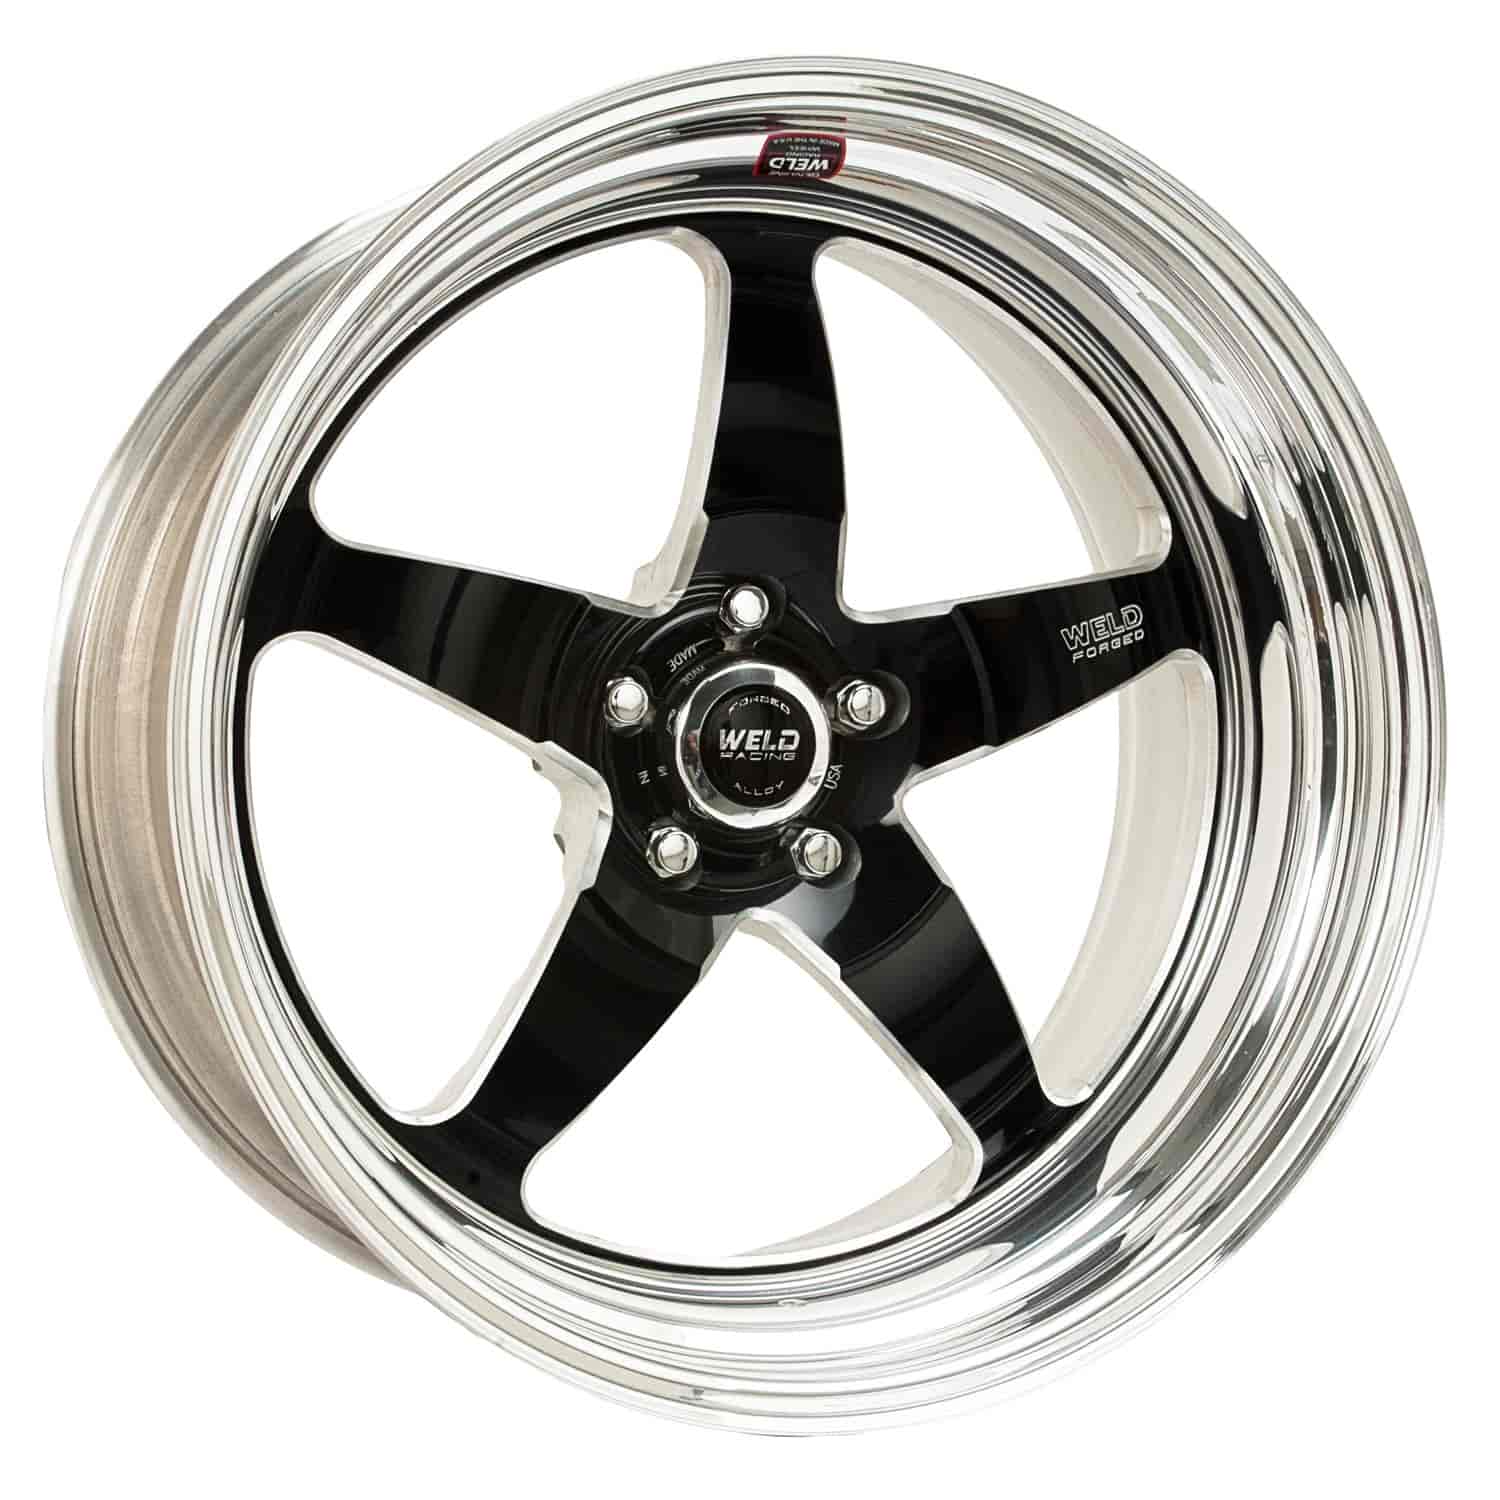 RT-S Series Wheel Size: 17" x 5" Bolt Circle: 5 x 4.75"